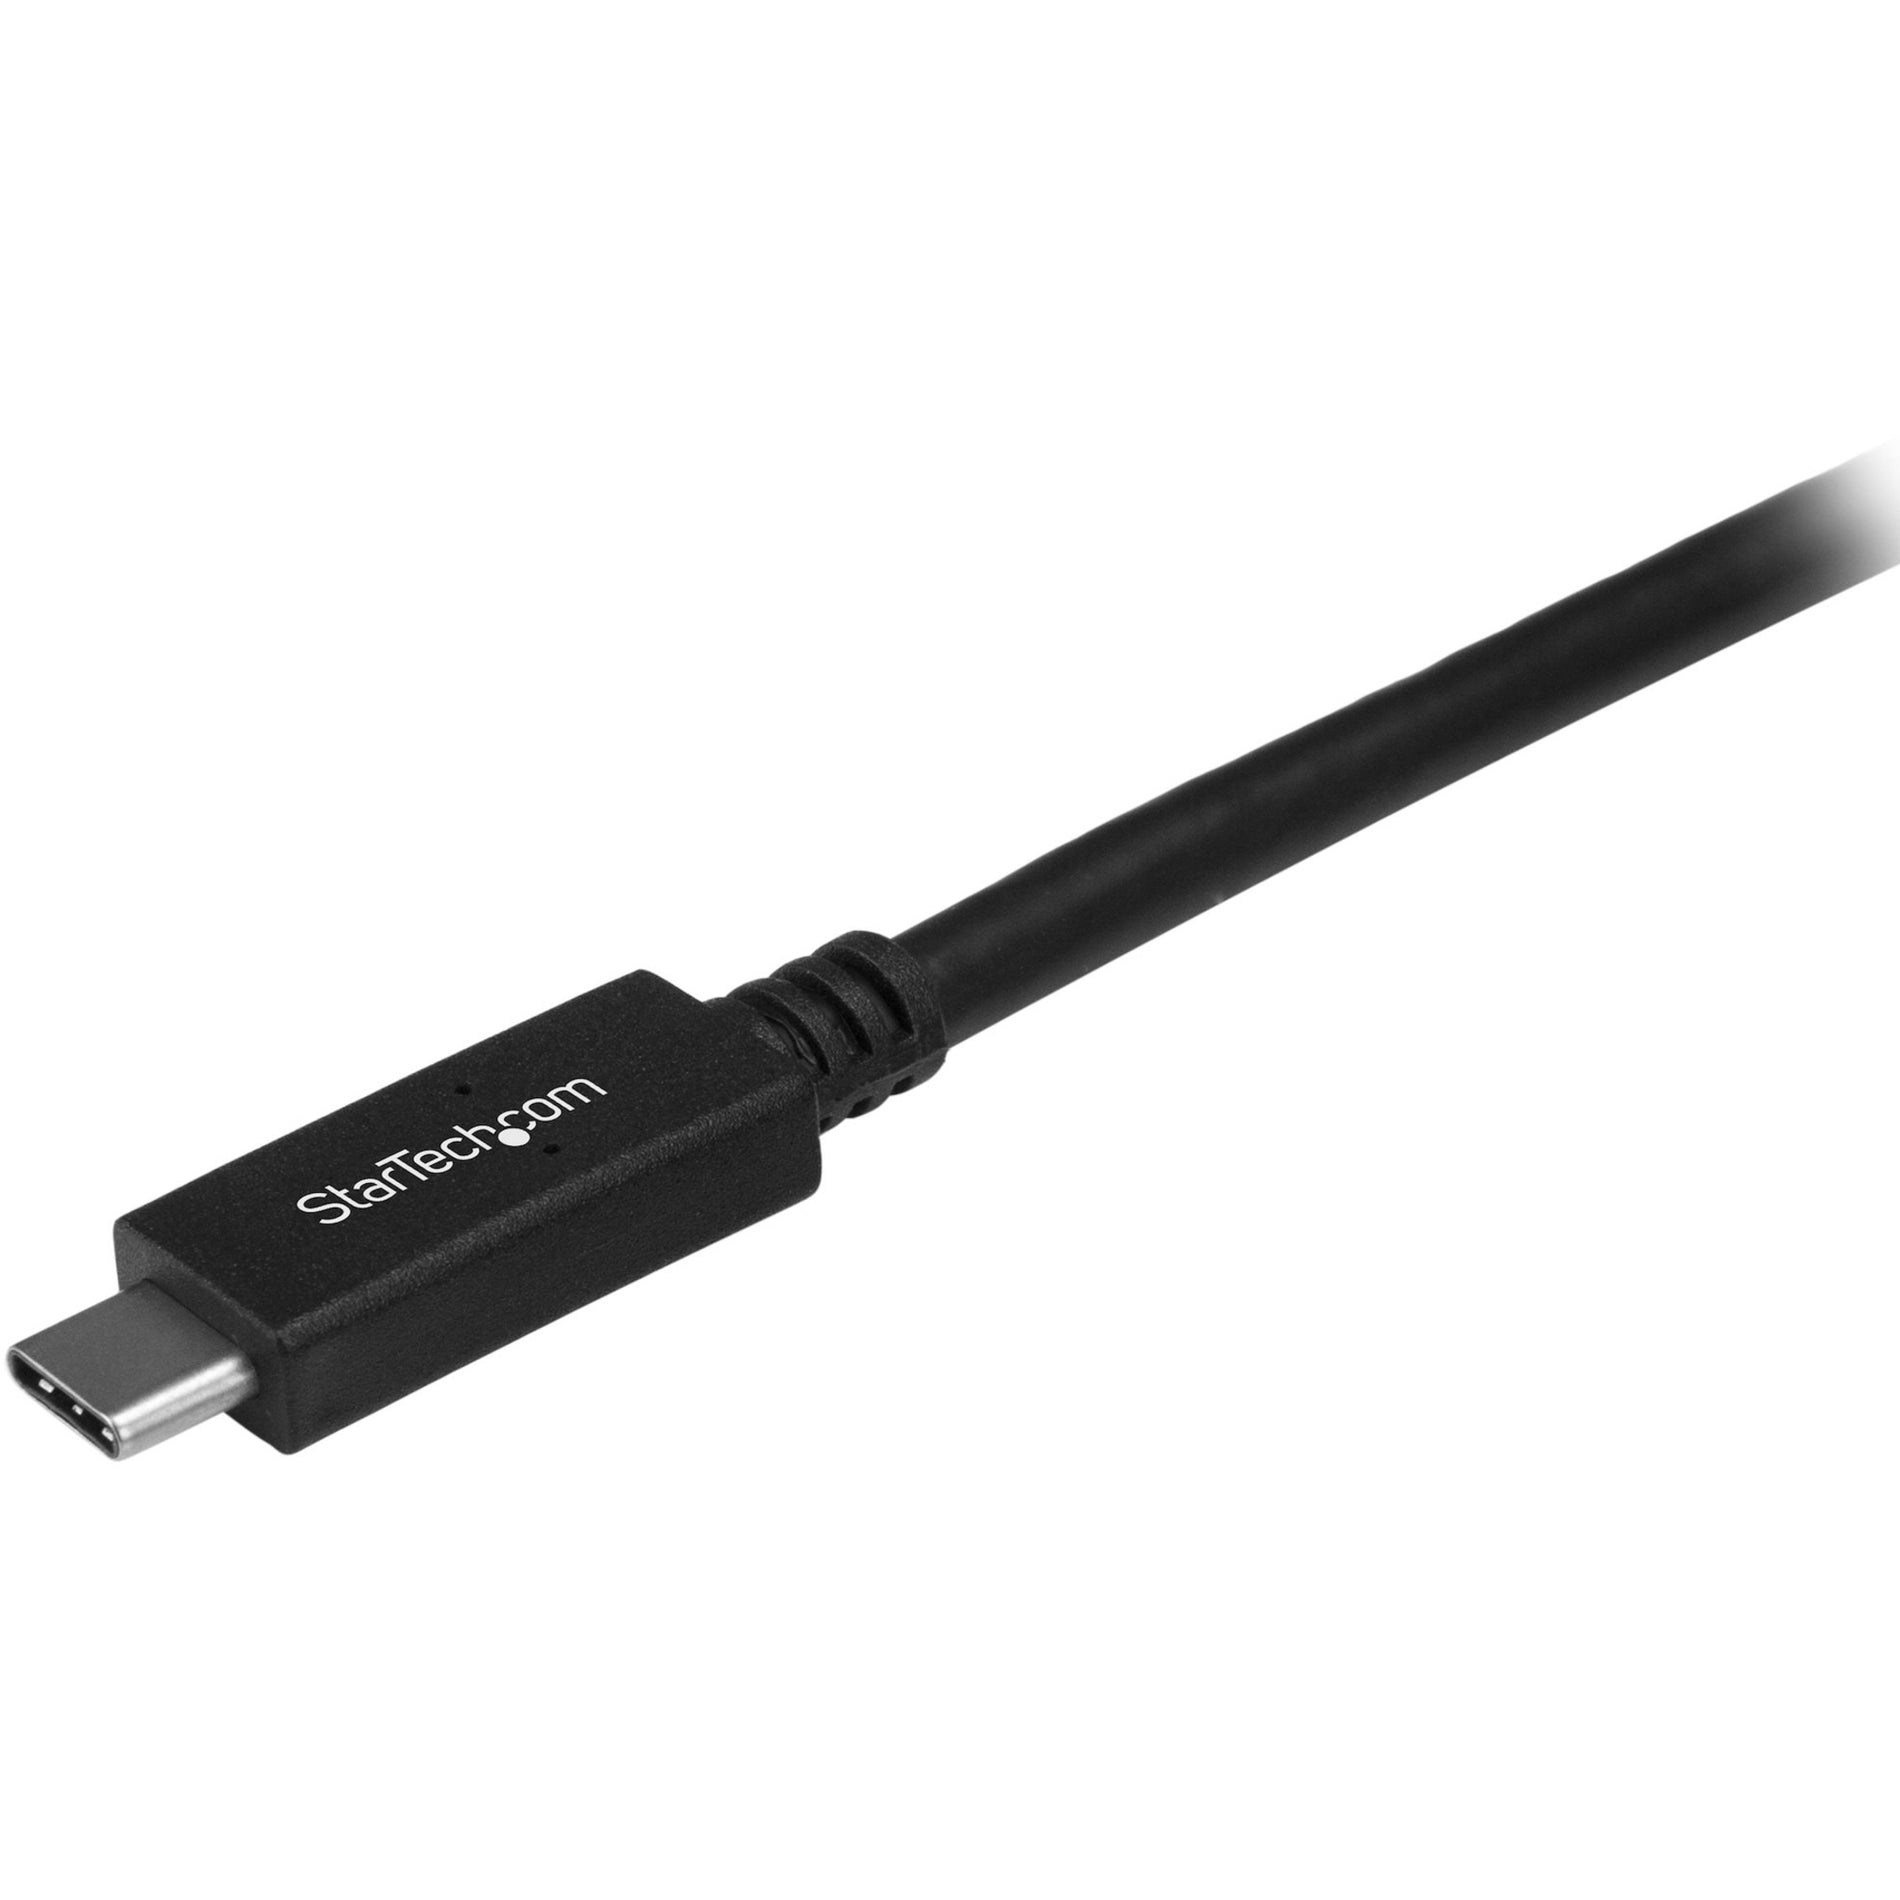 StarTech.com كبل USB31CC1M USB-C كبل 1 م (3 قدم) ، USB Type-C USB 3.1 Gen 2 كبل 10 جيجابت في الثانية